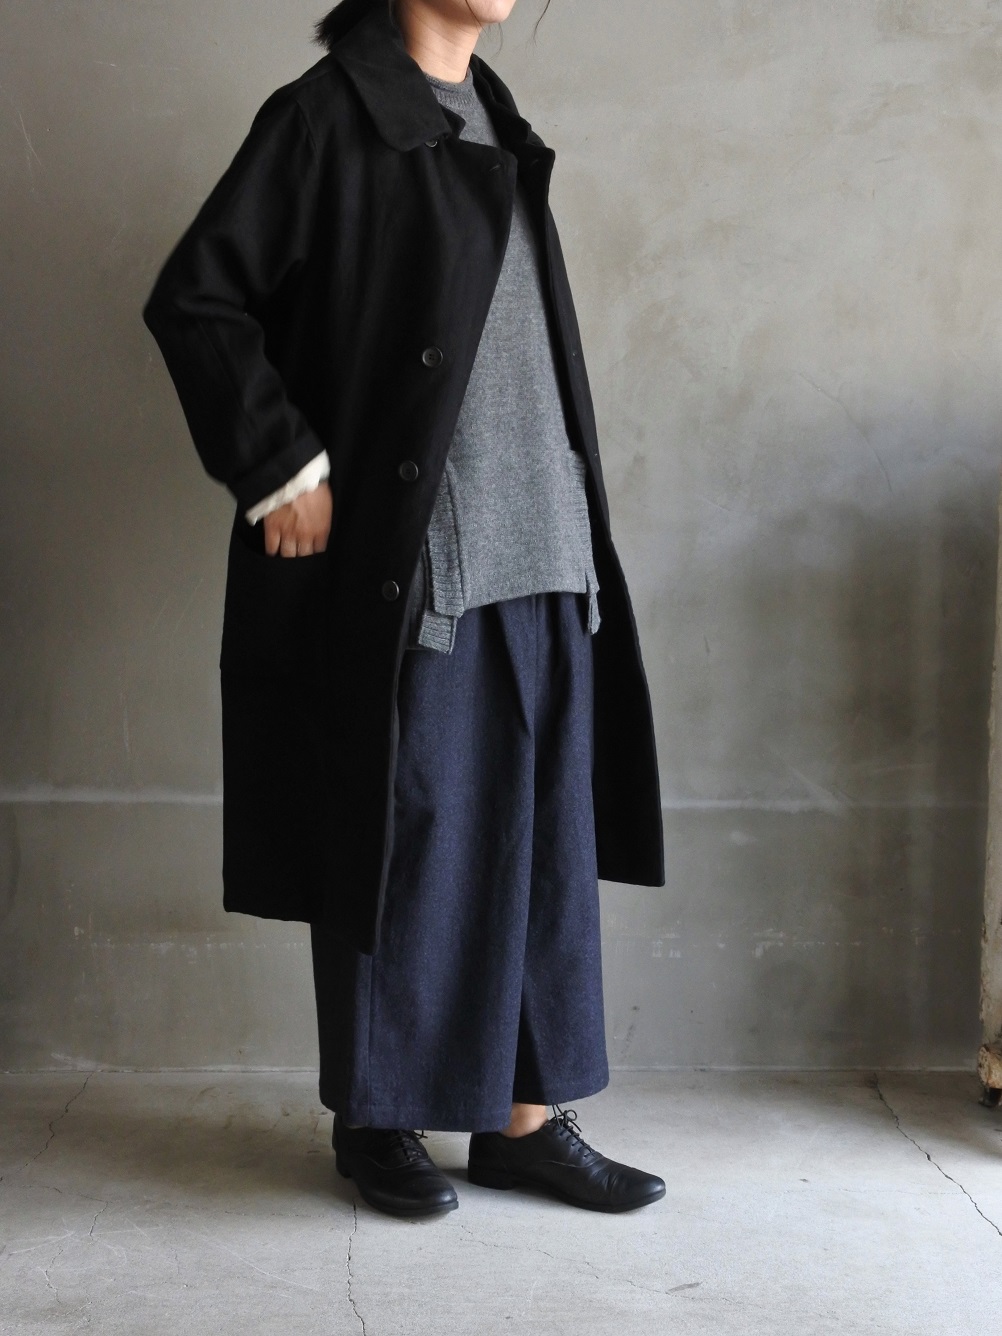 Vlas Blomme 目黒店― Wool Linen New items ― | NEWS | Vlas blomme 